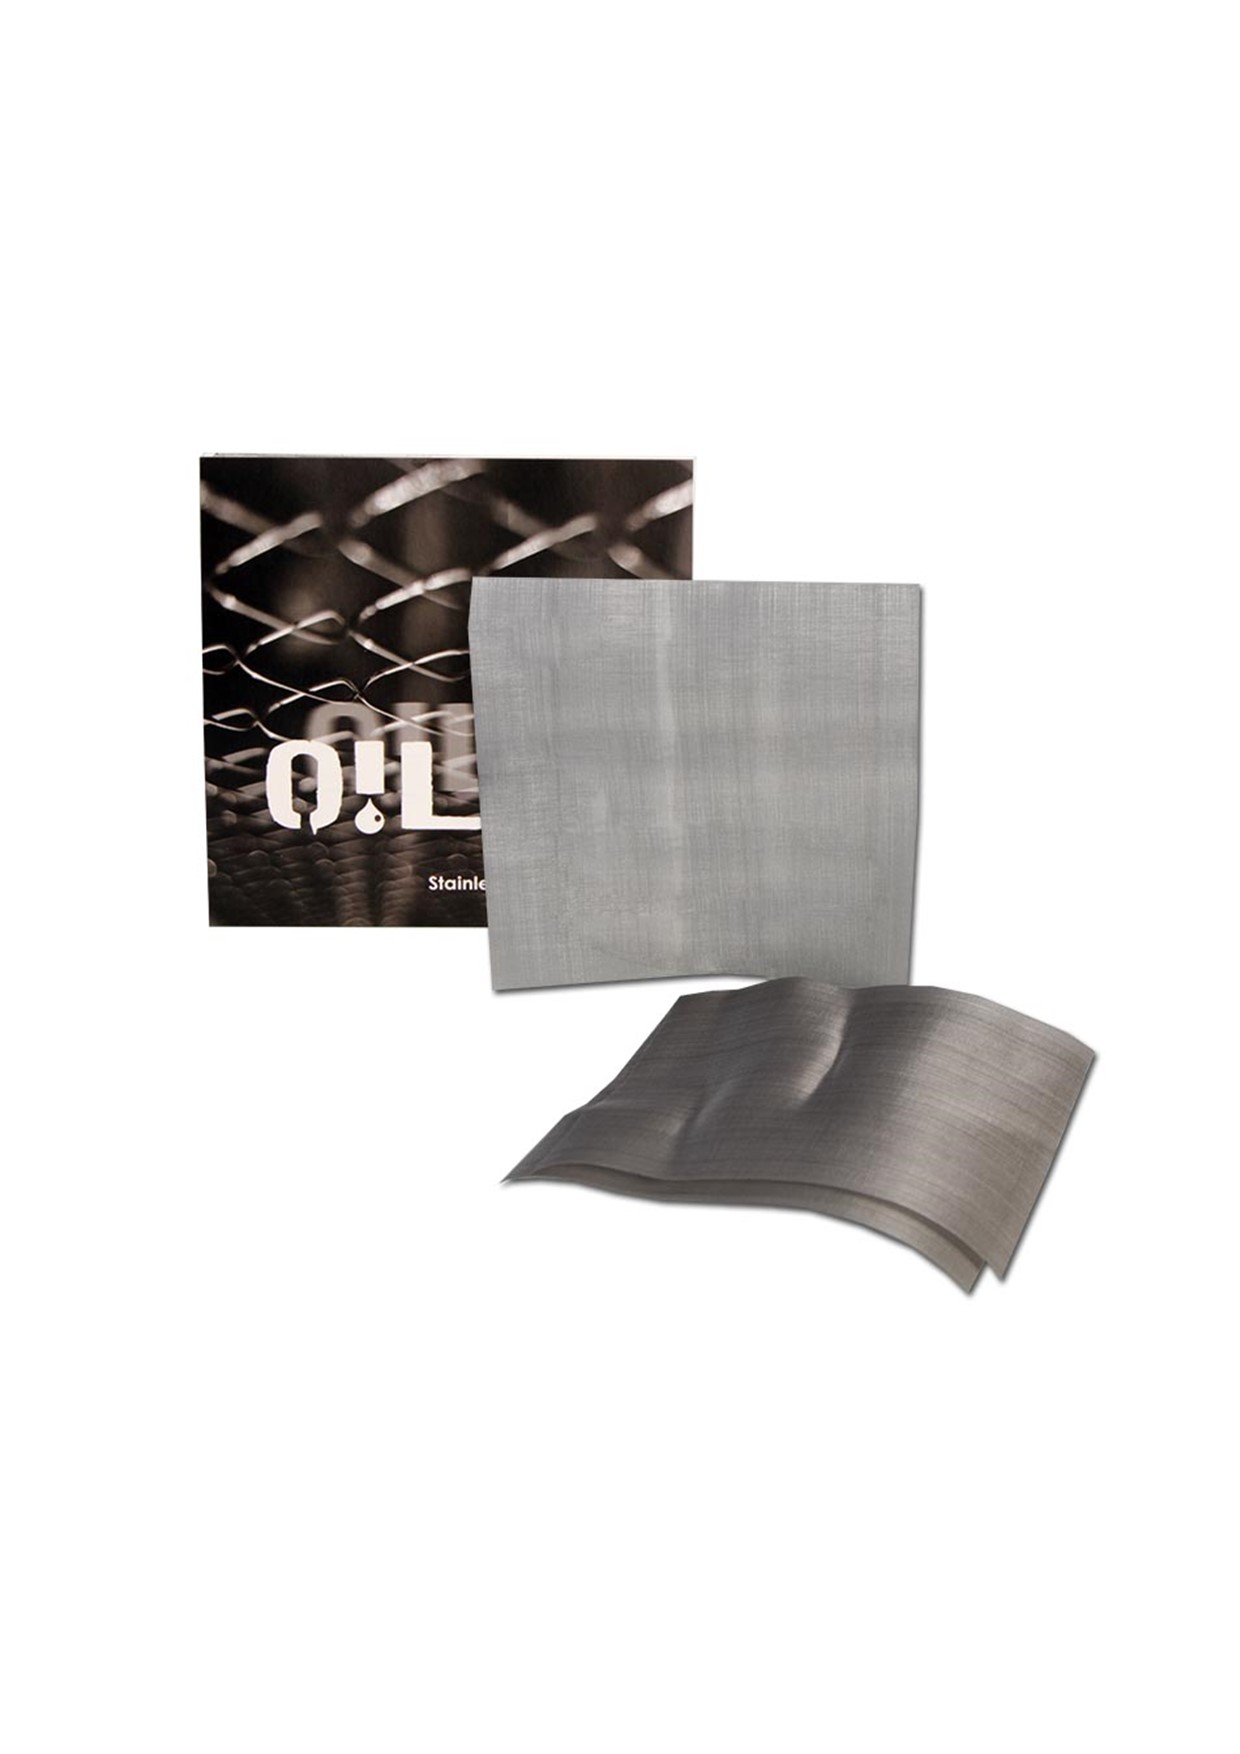 Stainless-Steel-Screens-110-Micron-10x10cm-Oil-Black-Leaf-3pz